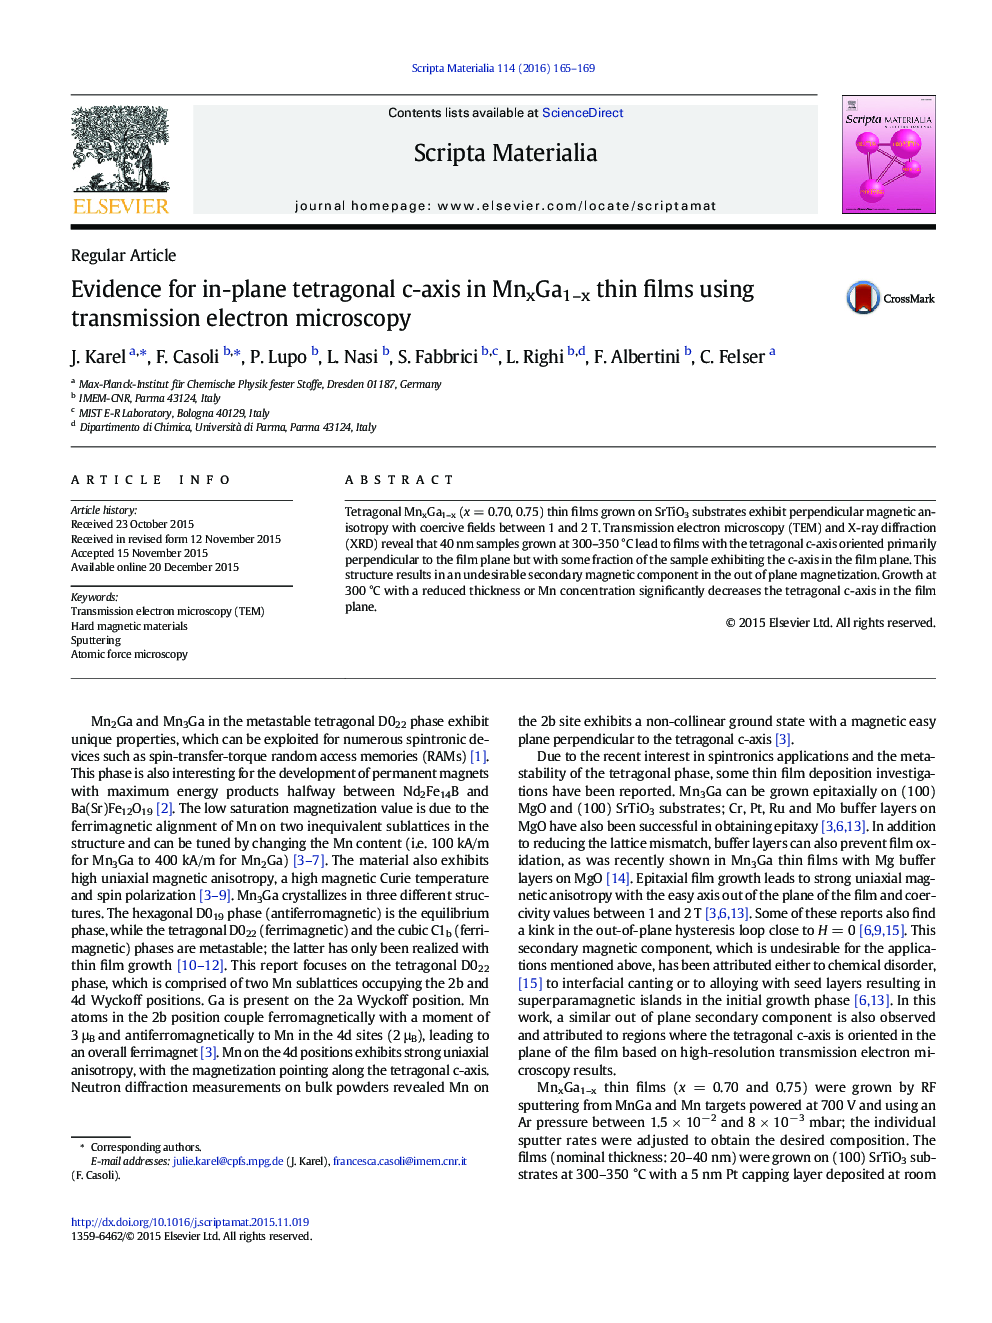 Evidence for in-plane tetragonal c-axis in MnxGa1–x thin films using transmission electron microscopy